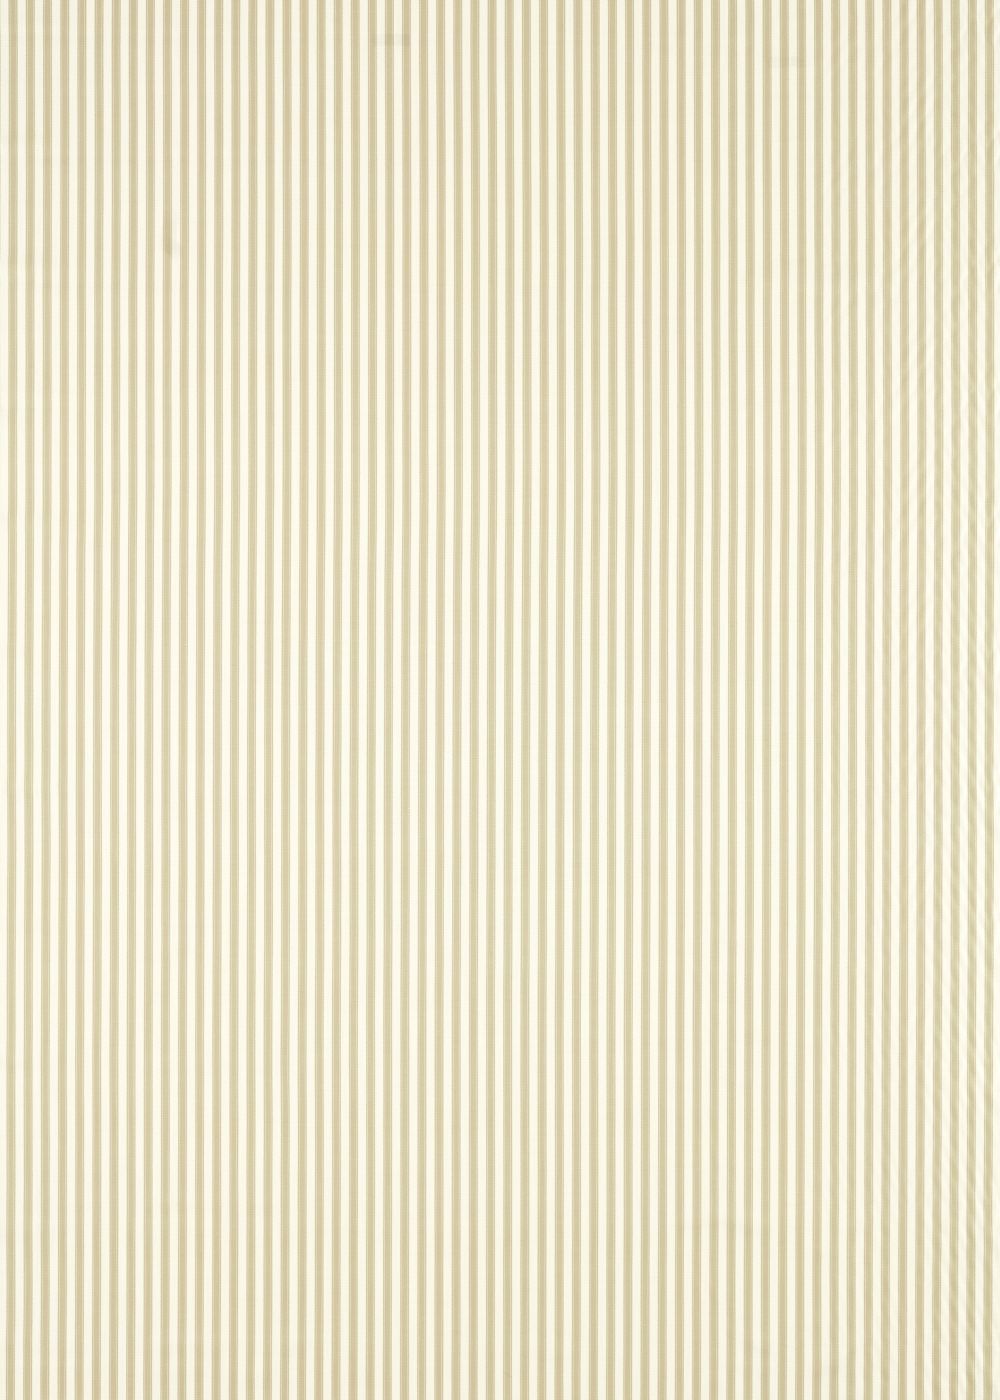 Pinetum Stripe Fabric - Flax - by Sanderson